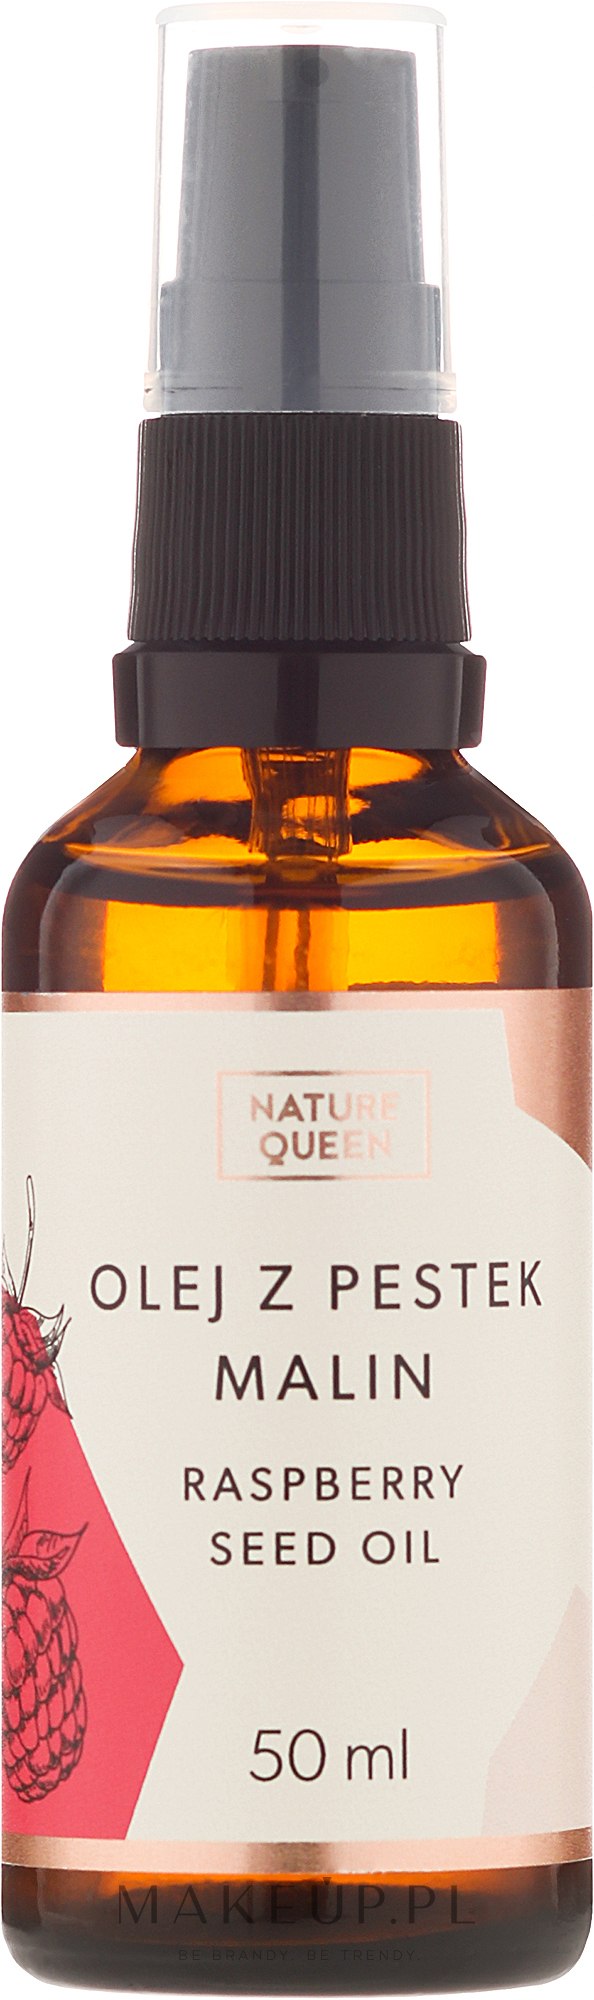 Olej z pestek malin - Nature Queen Raspberry Seed Oil — Zdjęcie 50 ml